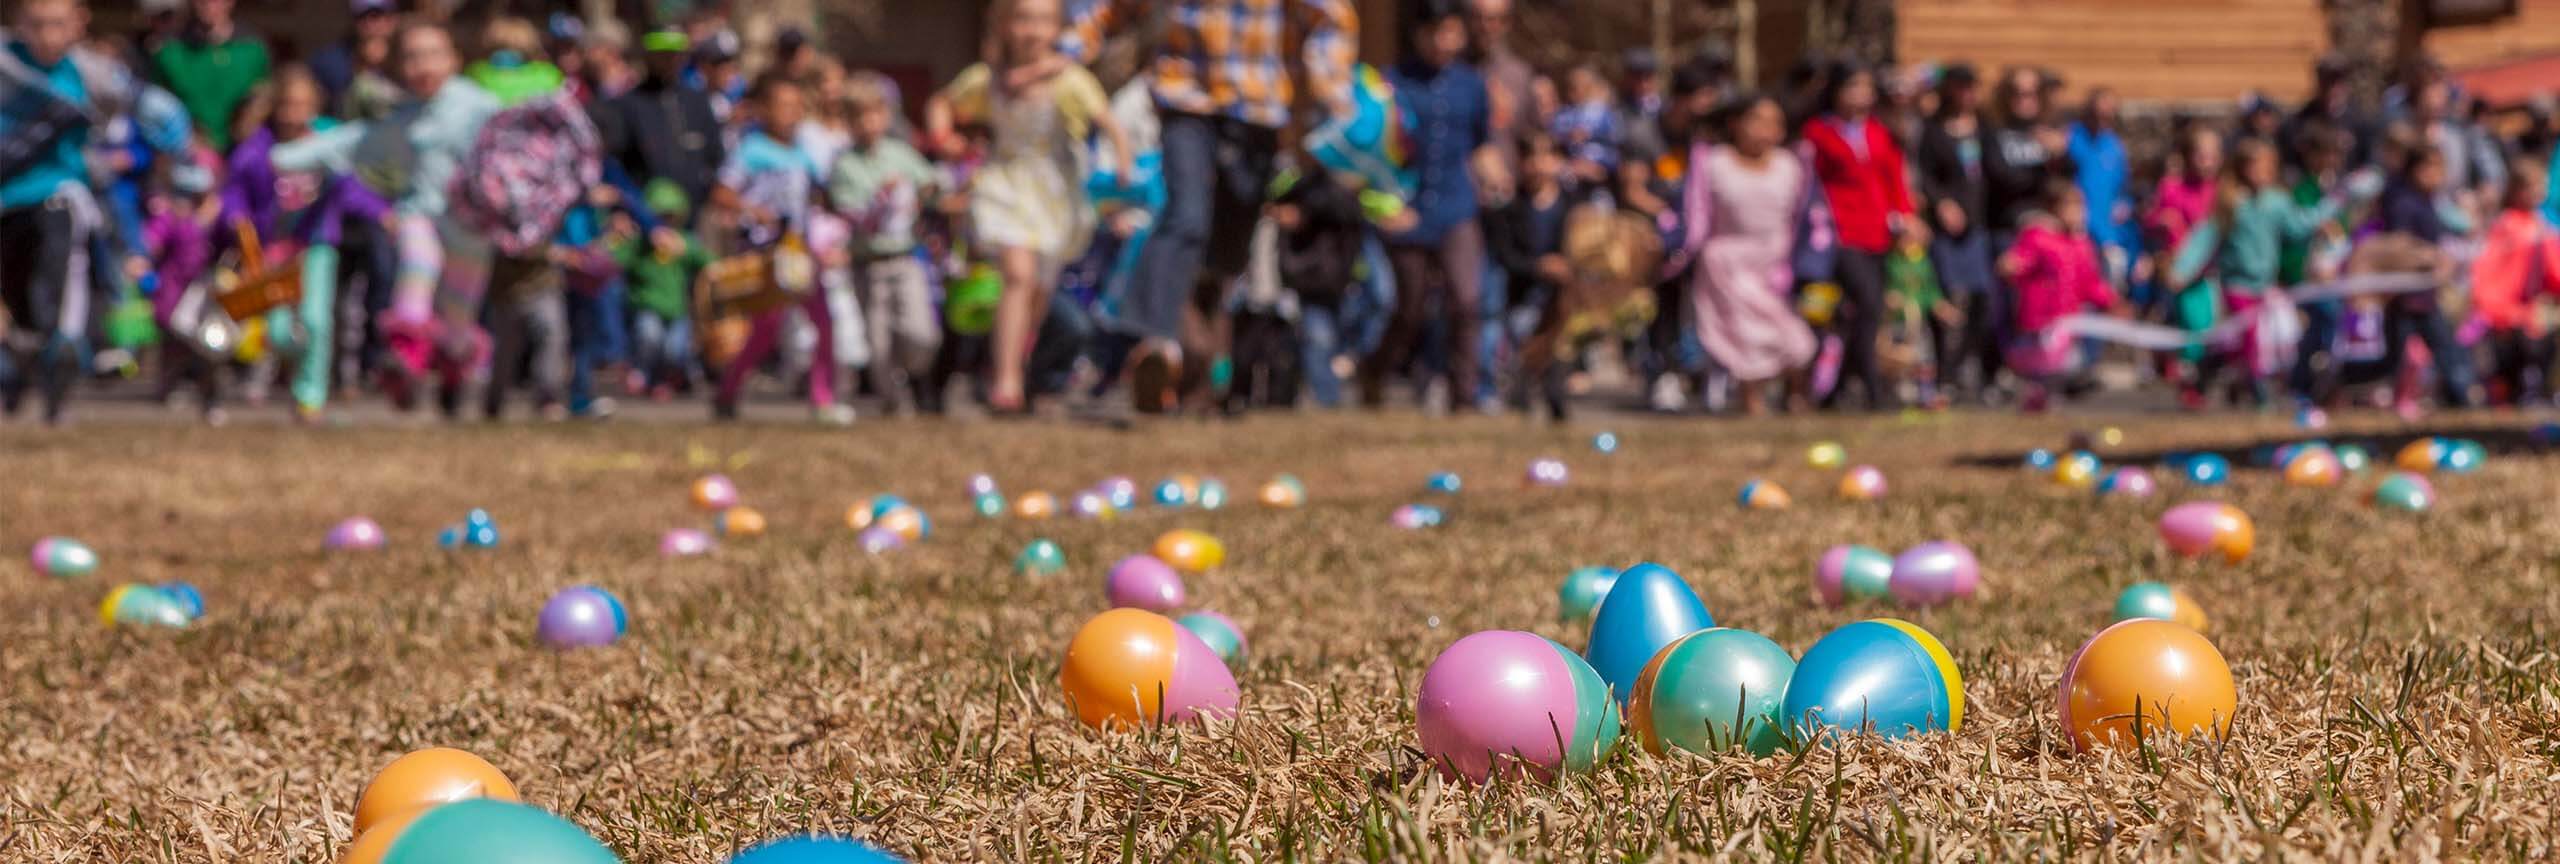 Easter Eggs on grass and kids running at Easter Egg Hunt